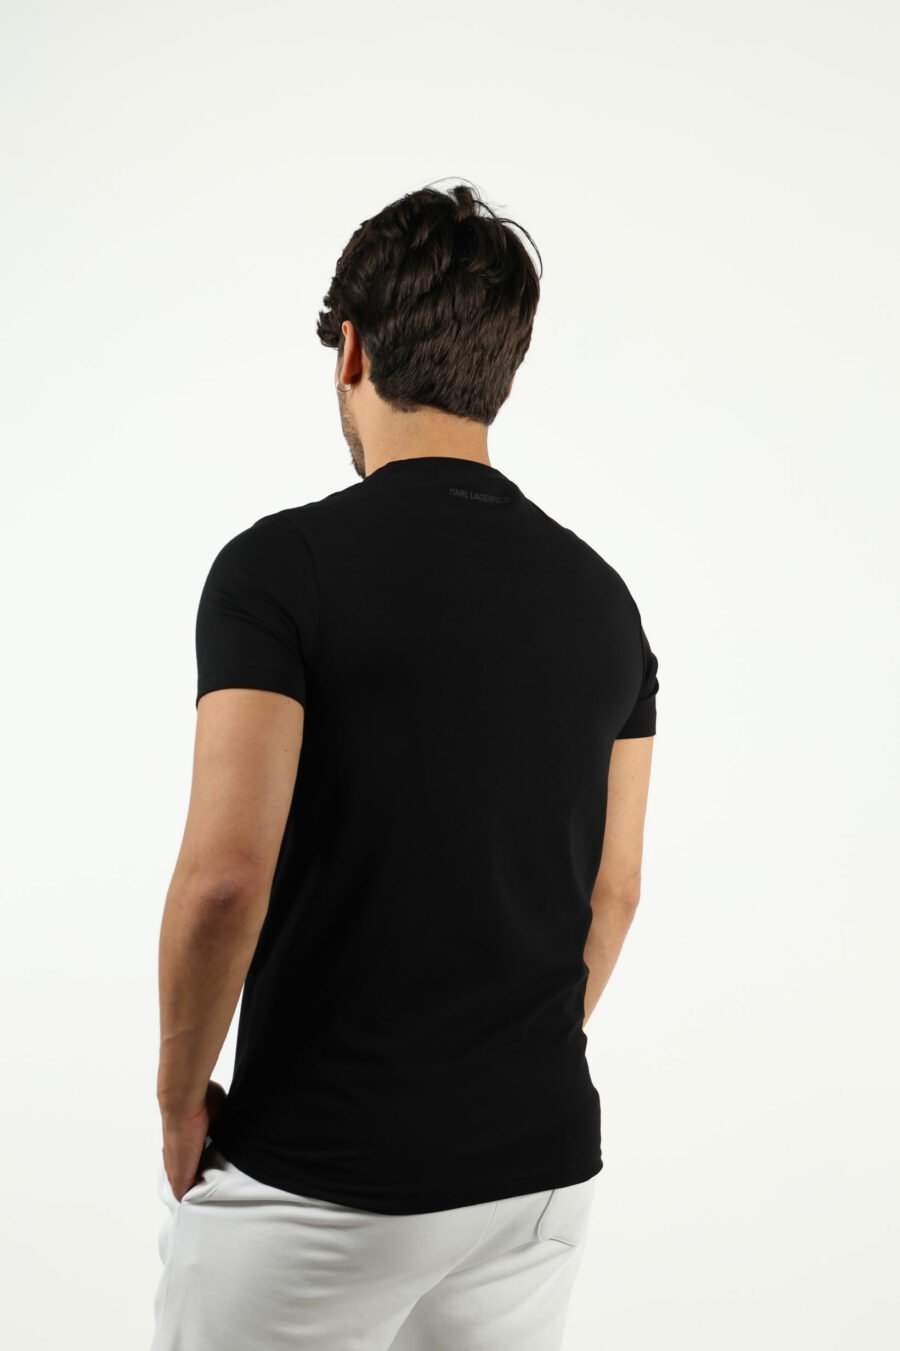 Camiseta negra con minilogo negro en goma - number14143